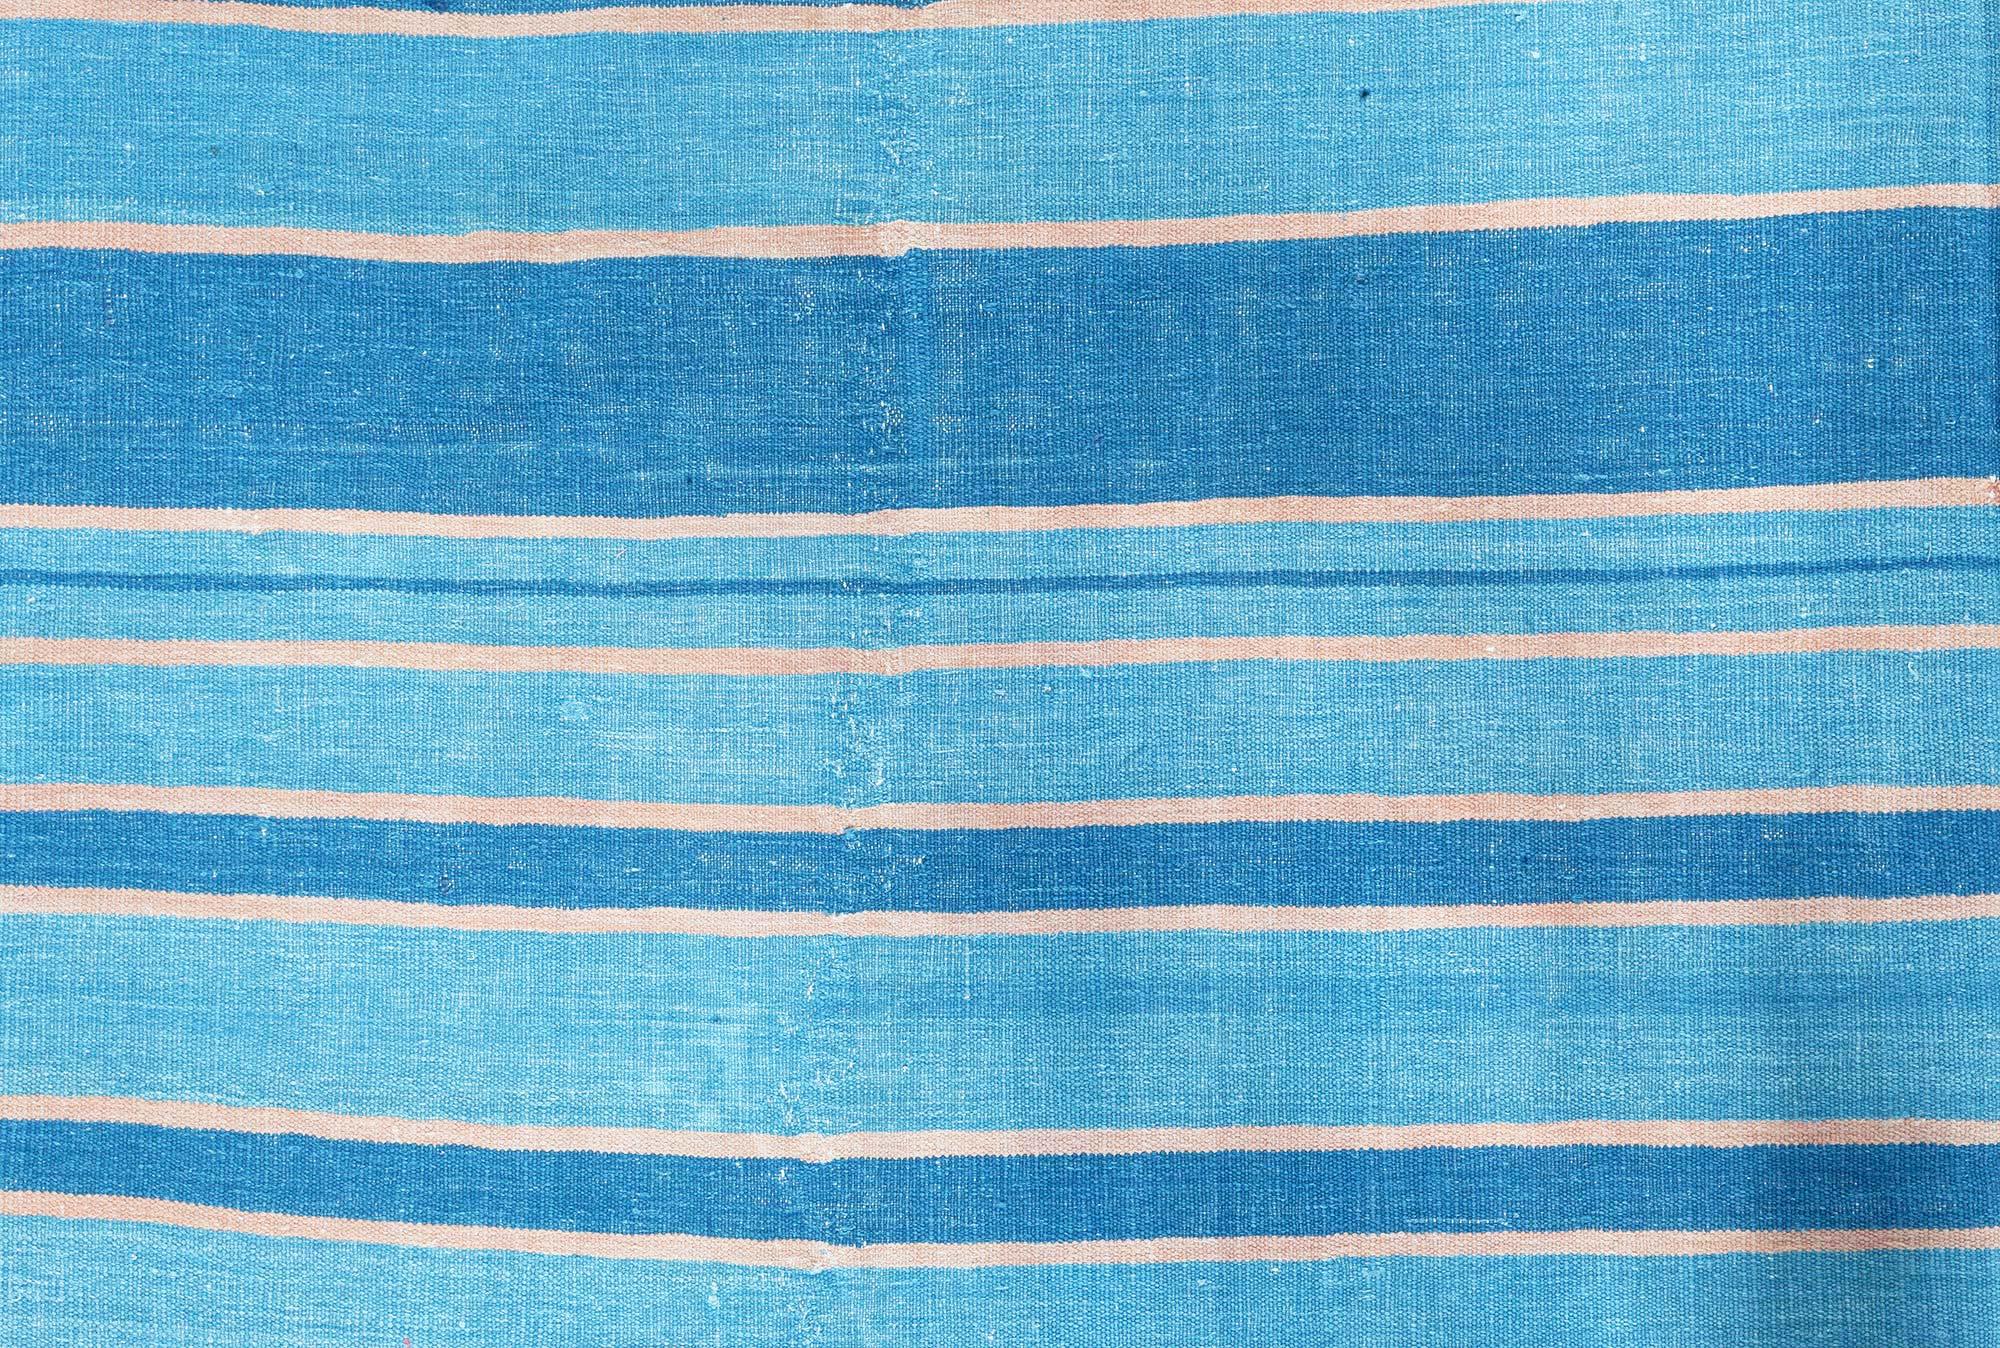 Vintage Indian Dhurrie striped blue rug
Size: 14'9